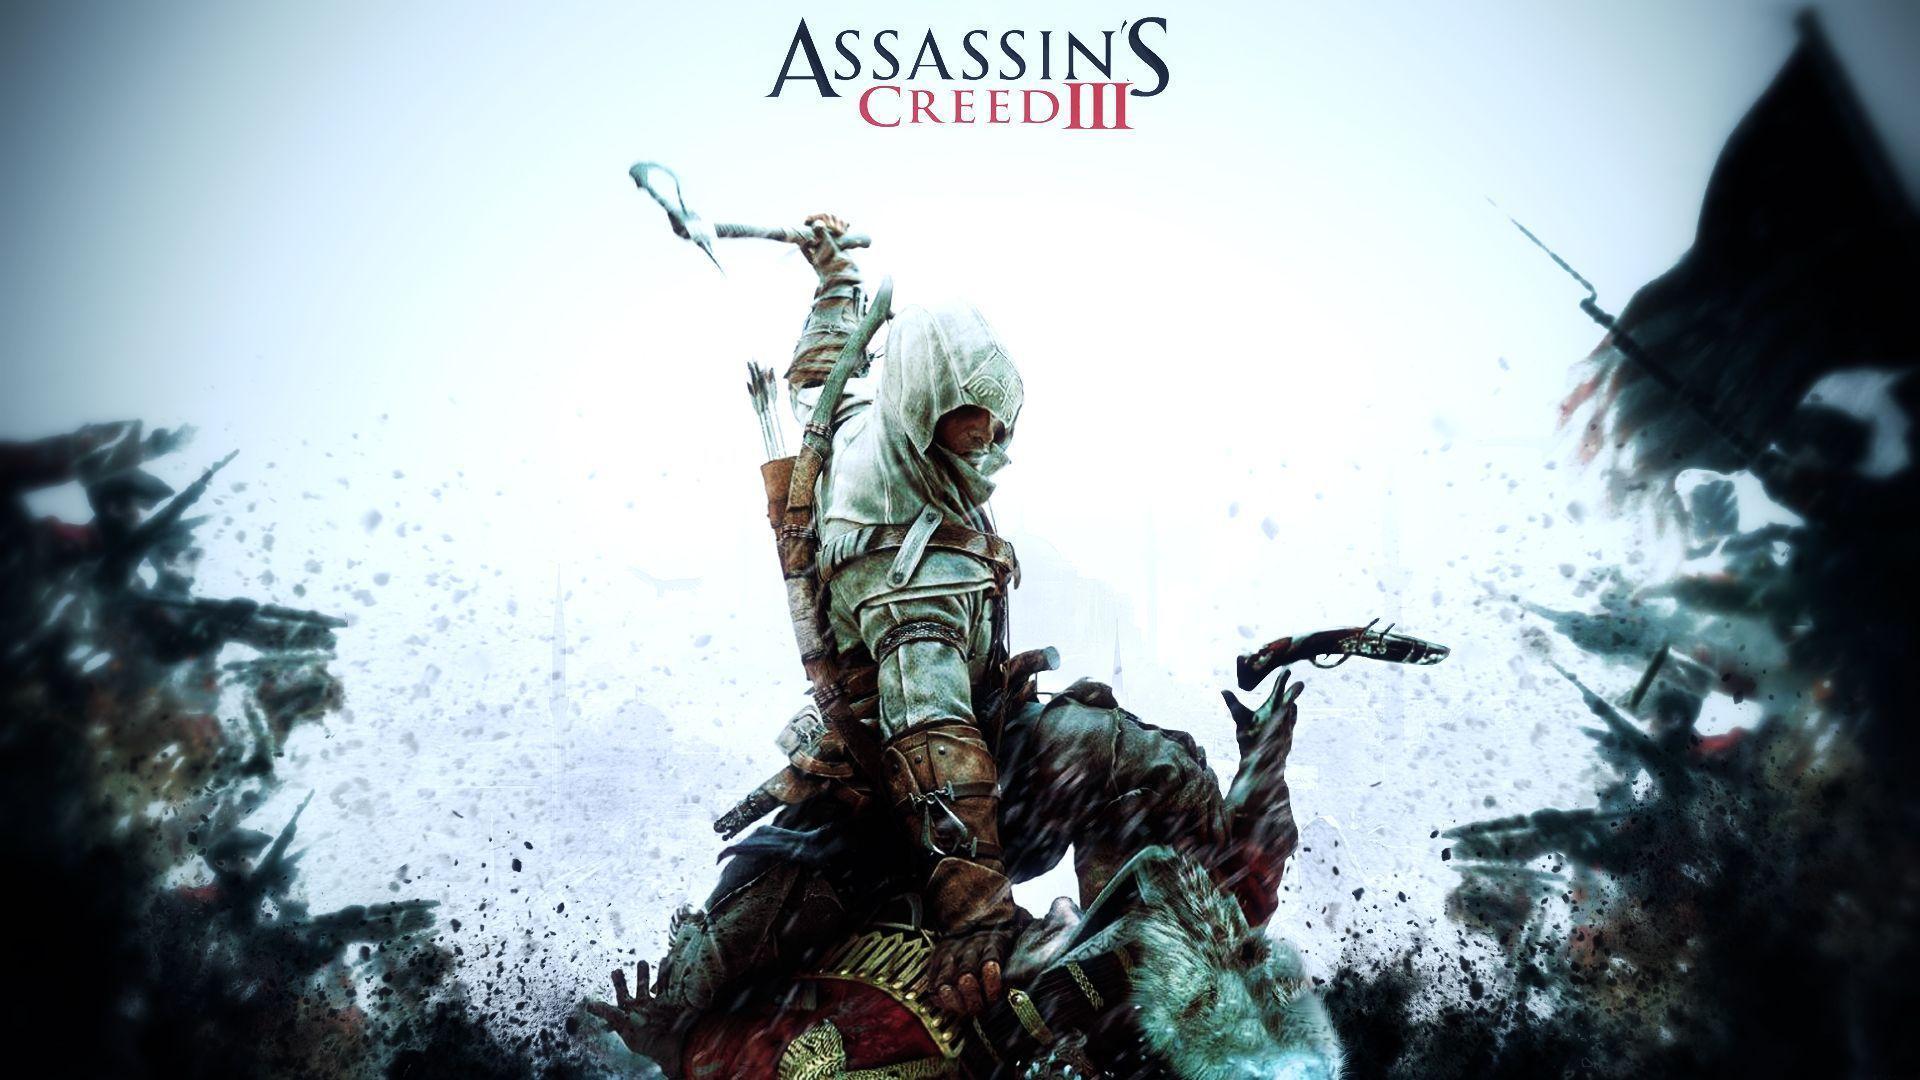 Assassin&;s Creed Iii wallpaper